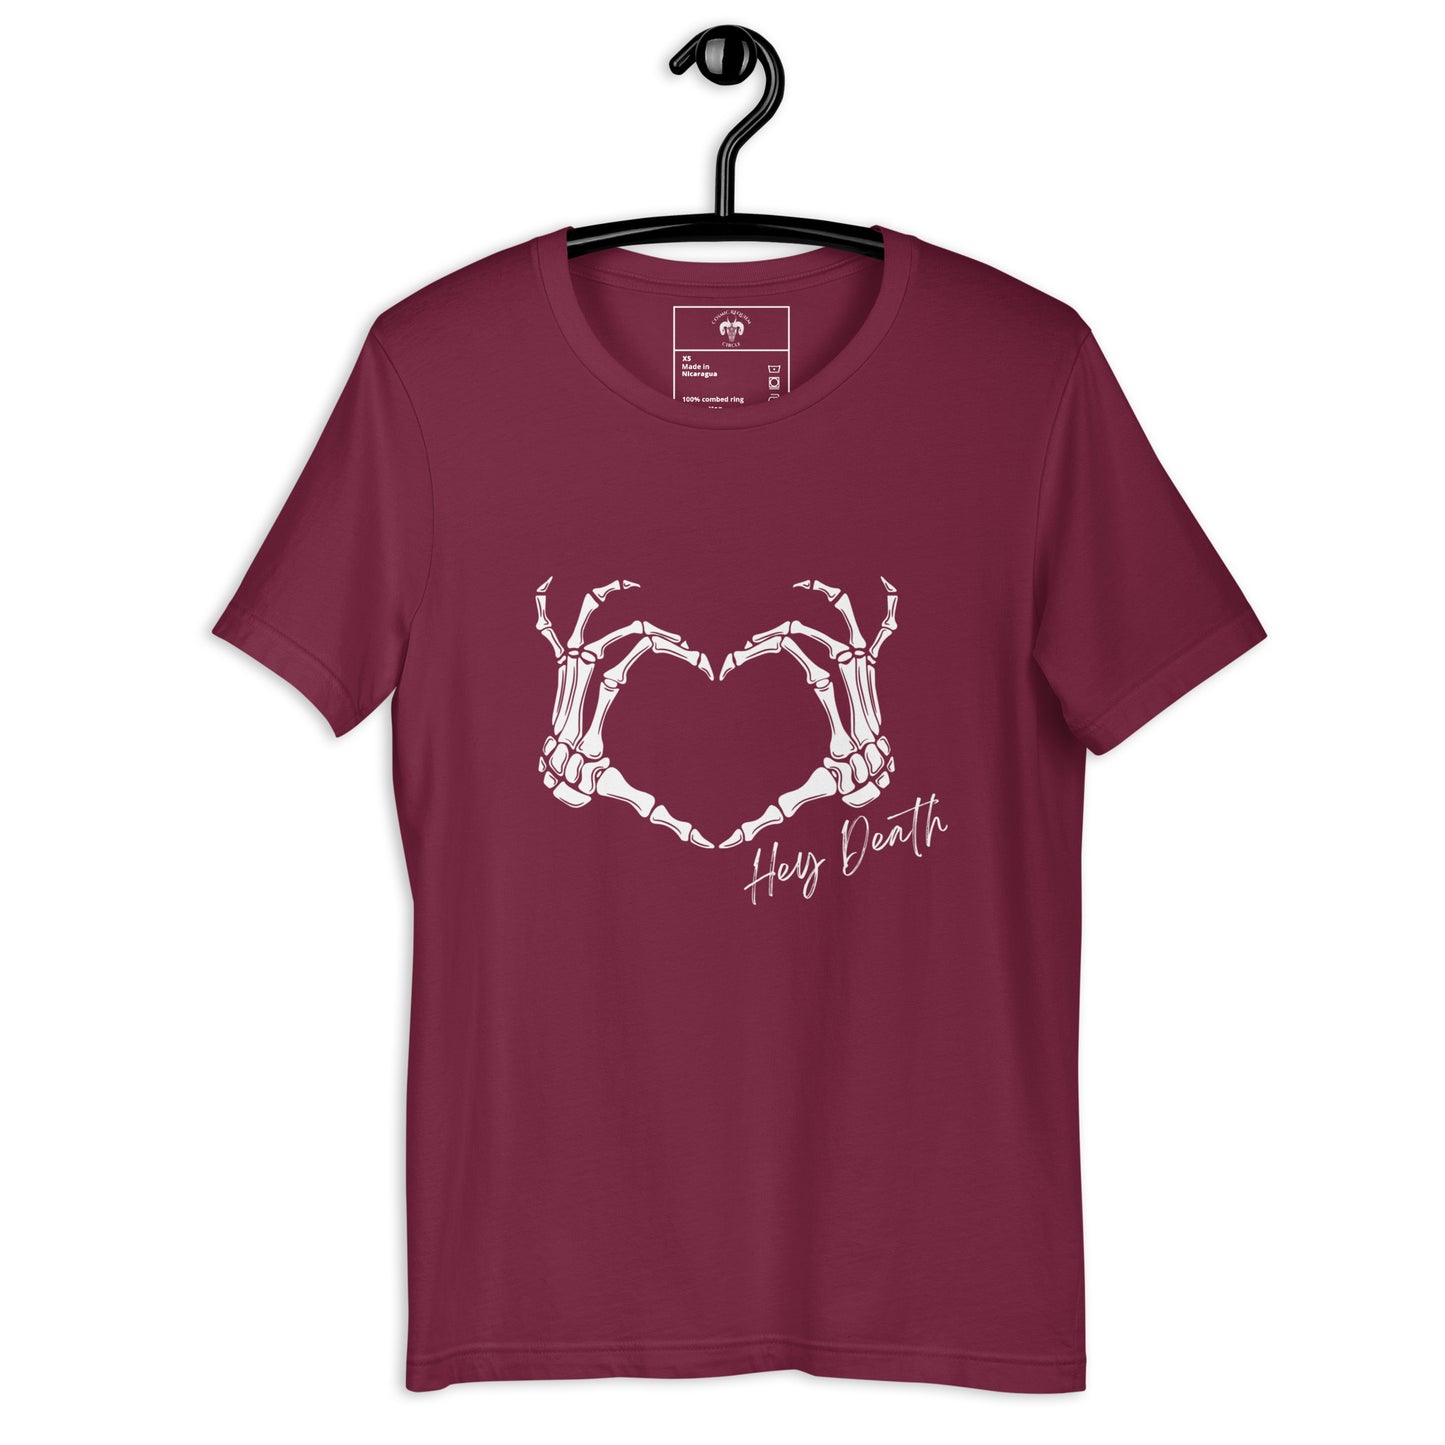 Hey Death Skeleton Heart Hands Unisex t-shirt